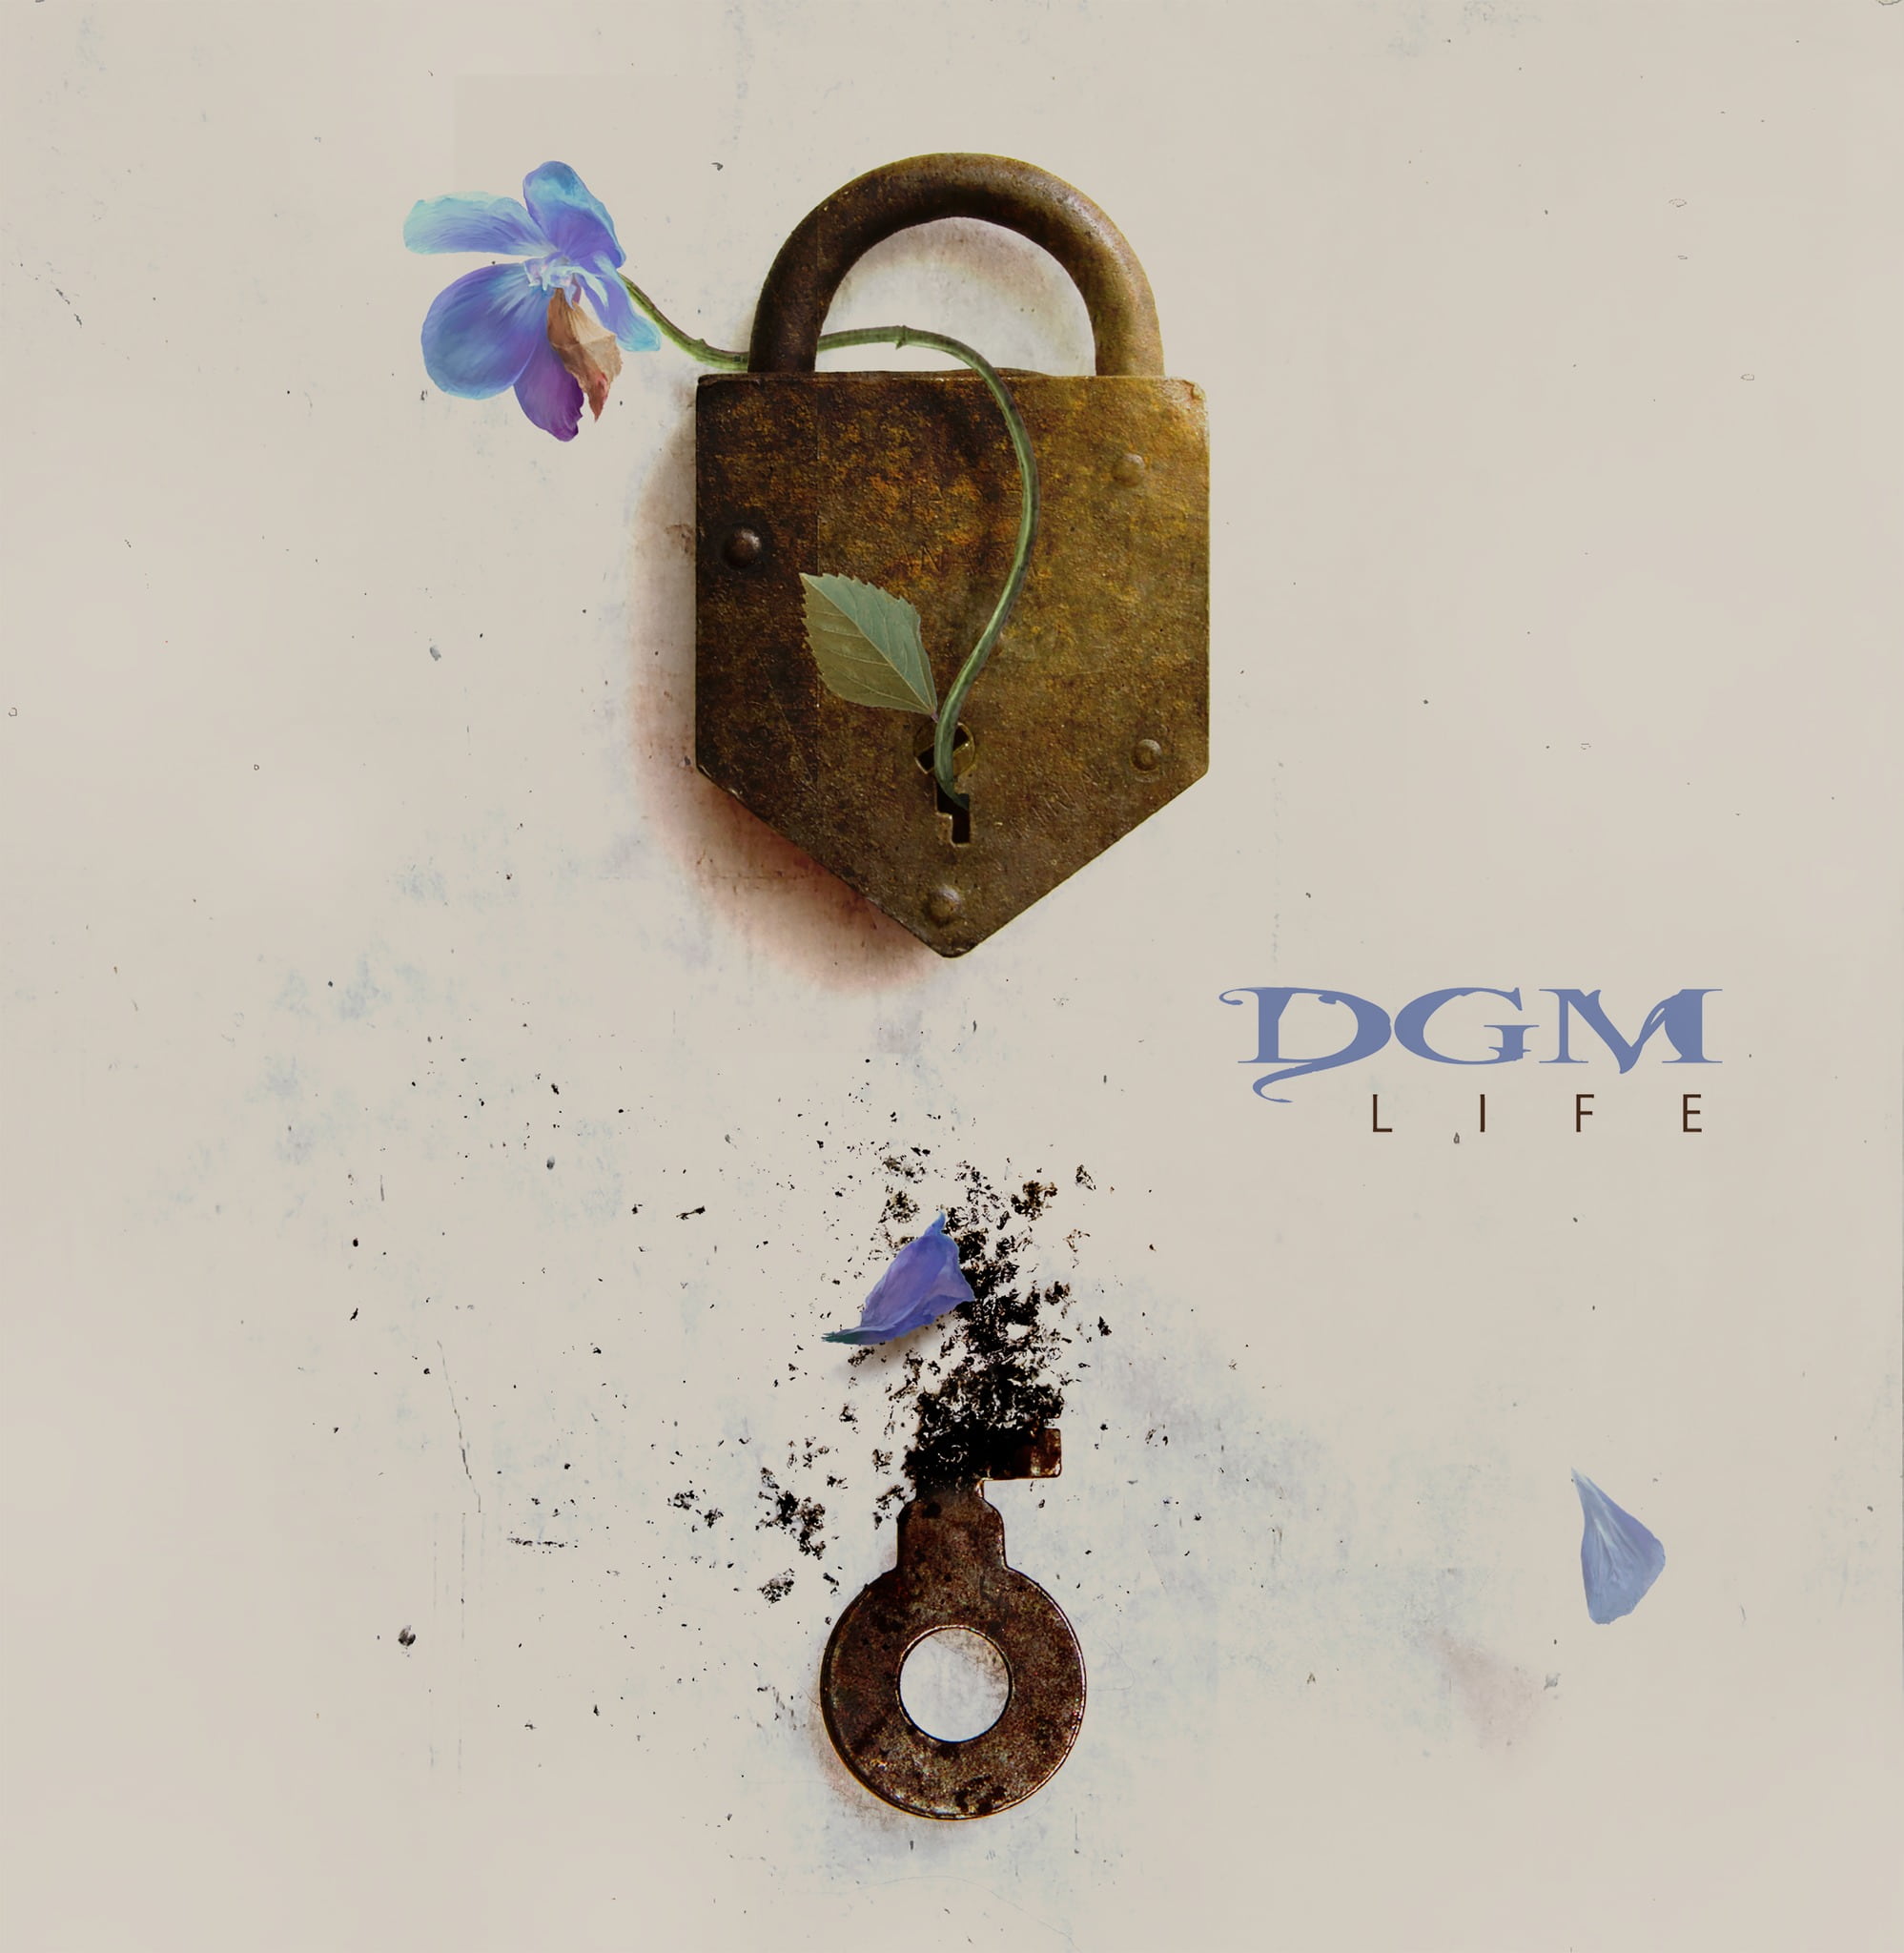 DGM – Life